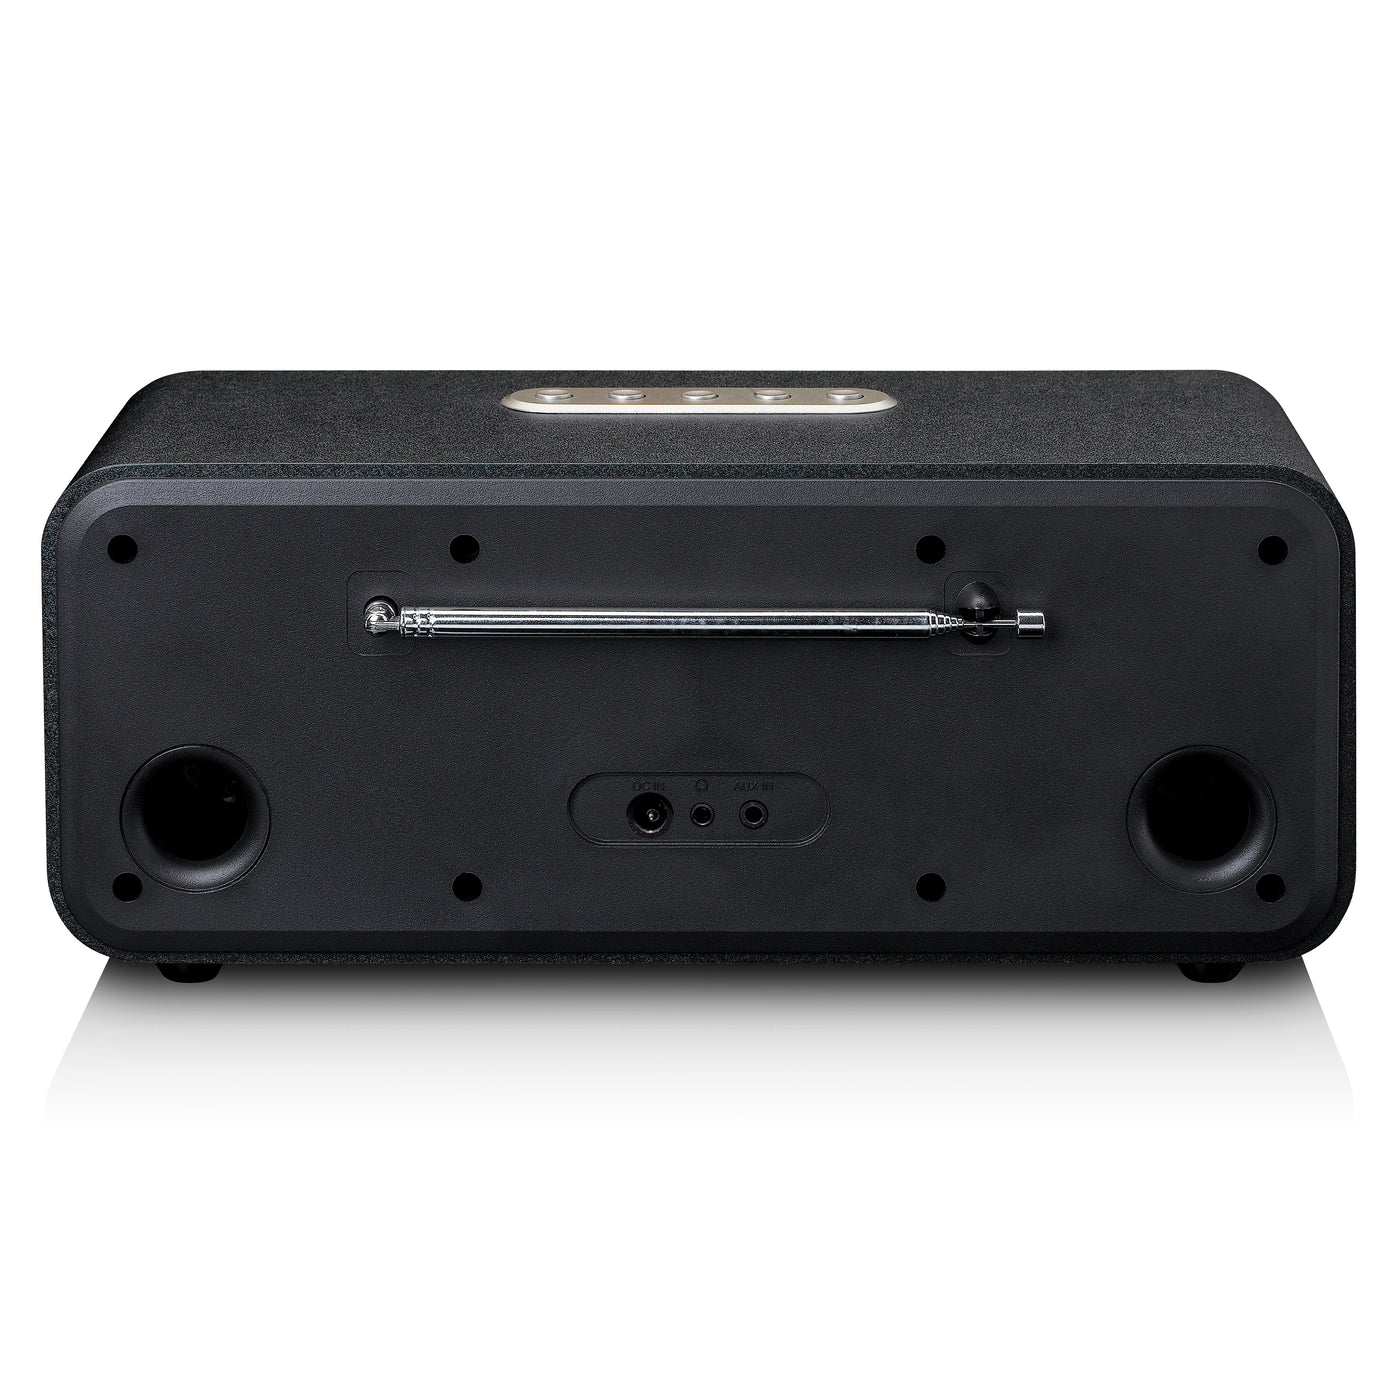 LENCO DIR-141BK - Internet radio with DAB+, Bluetooth® and Spotify Connect, black